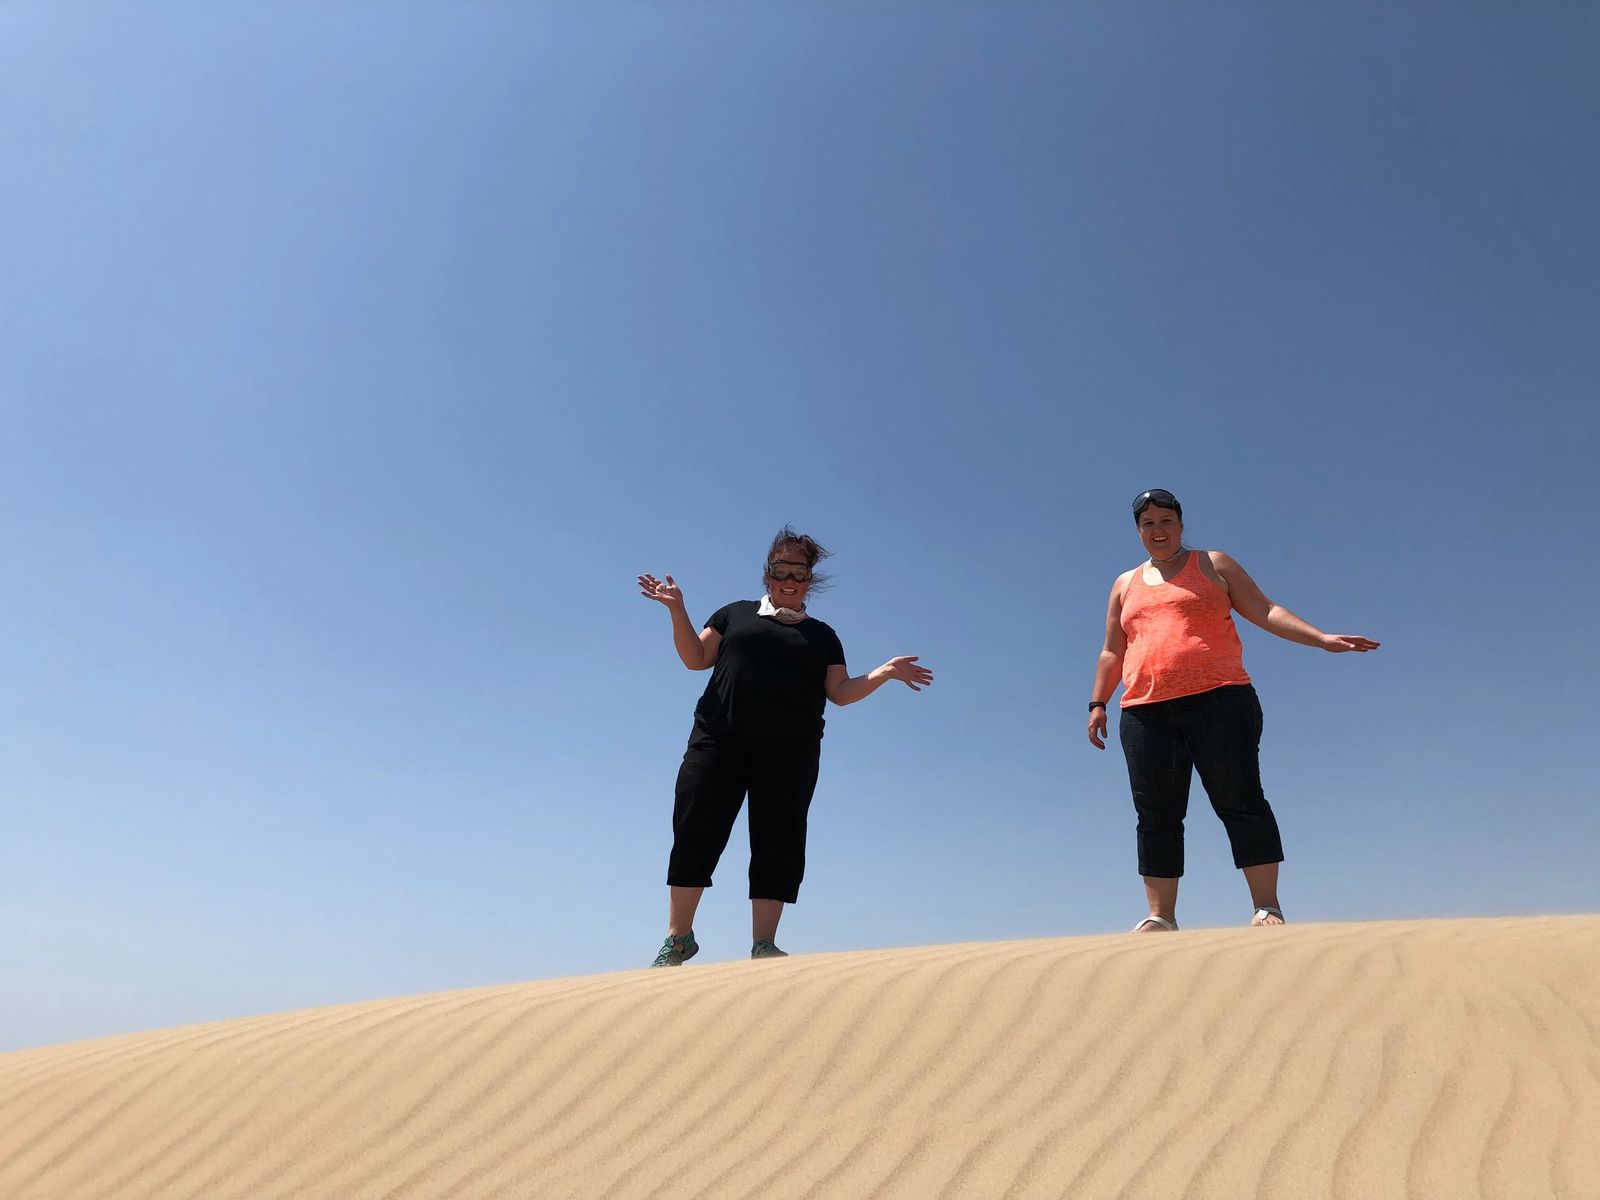 Paracas Desert in Peru - Dune Buggying Adventure - #Peru #Paracasdesertperu #dunebuggy